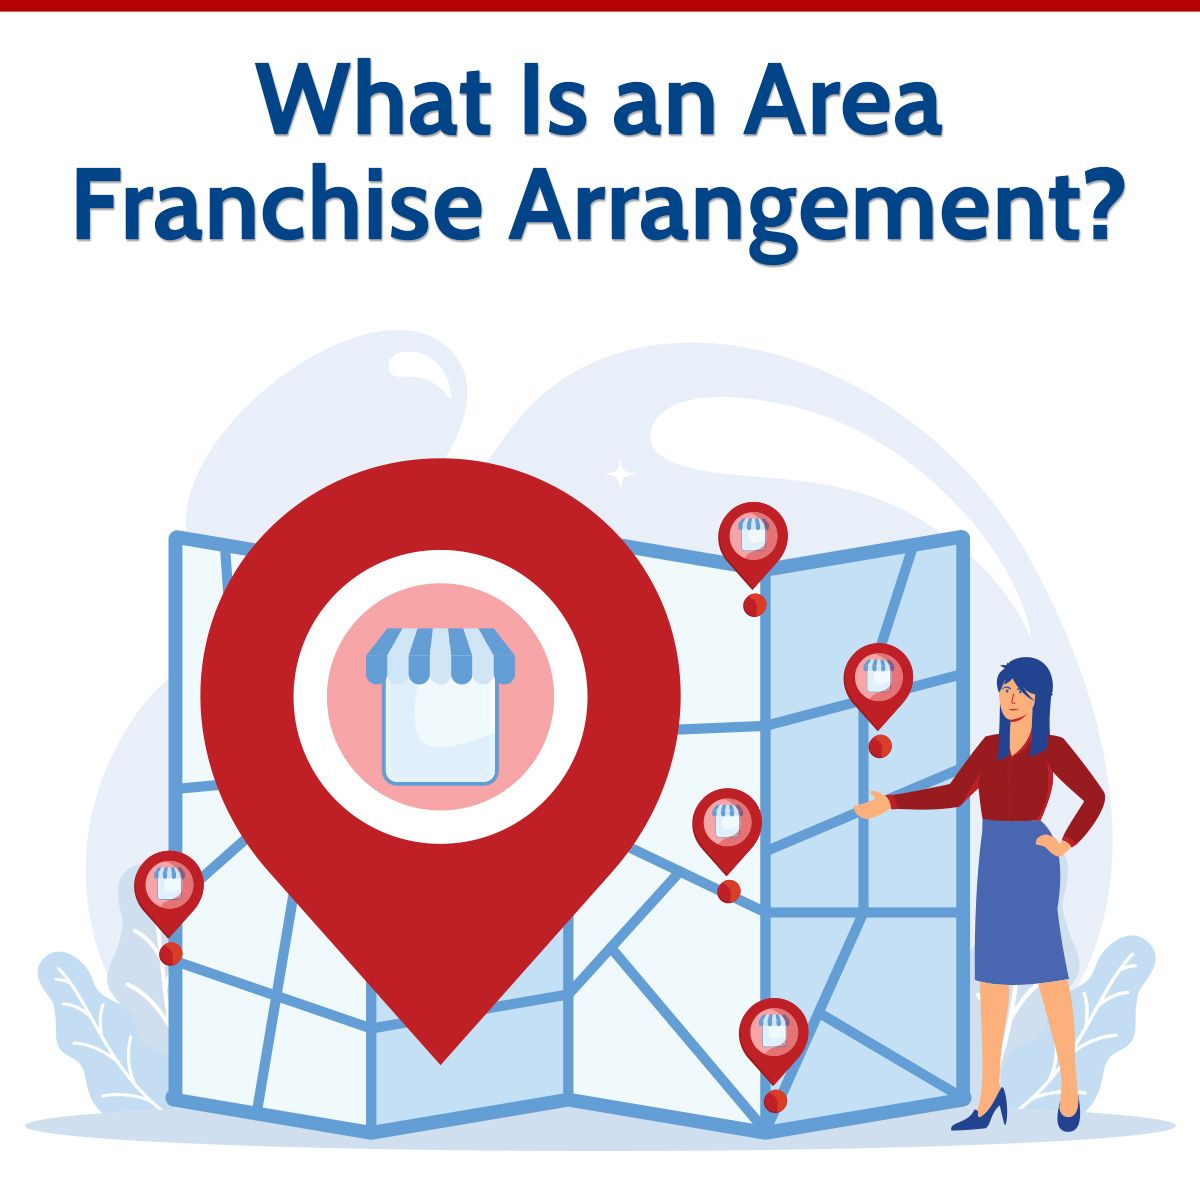 What Is an Area Franchise Arrangement?